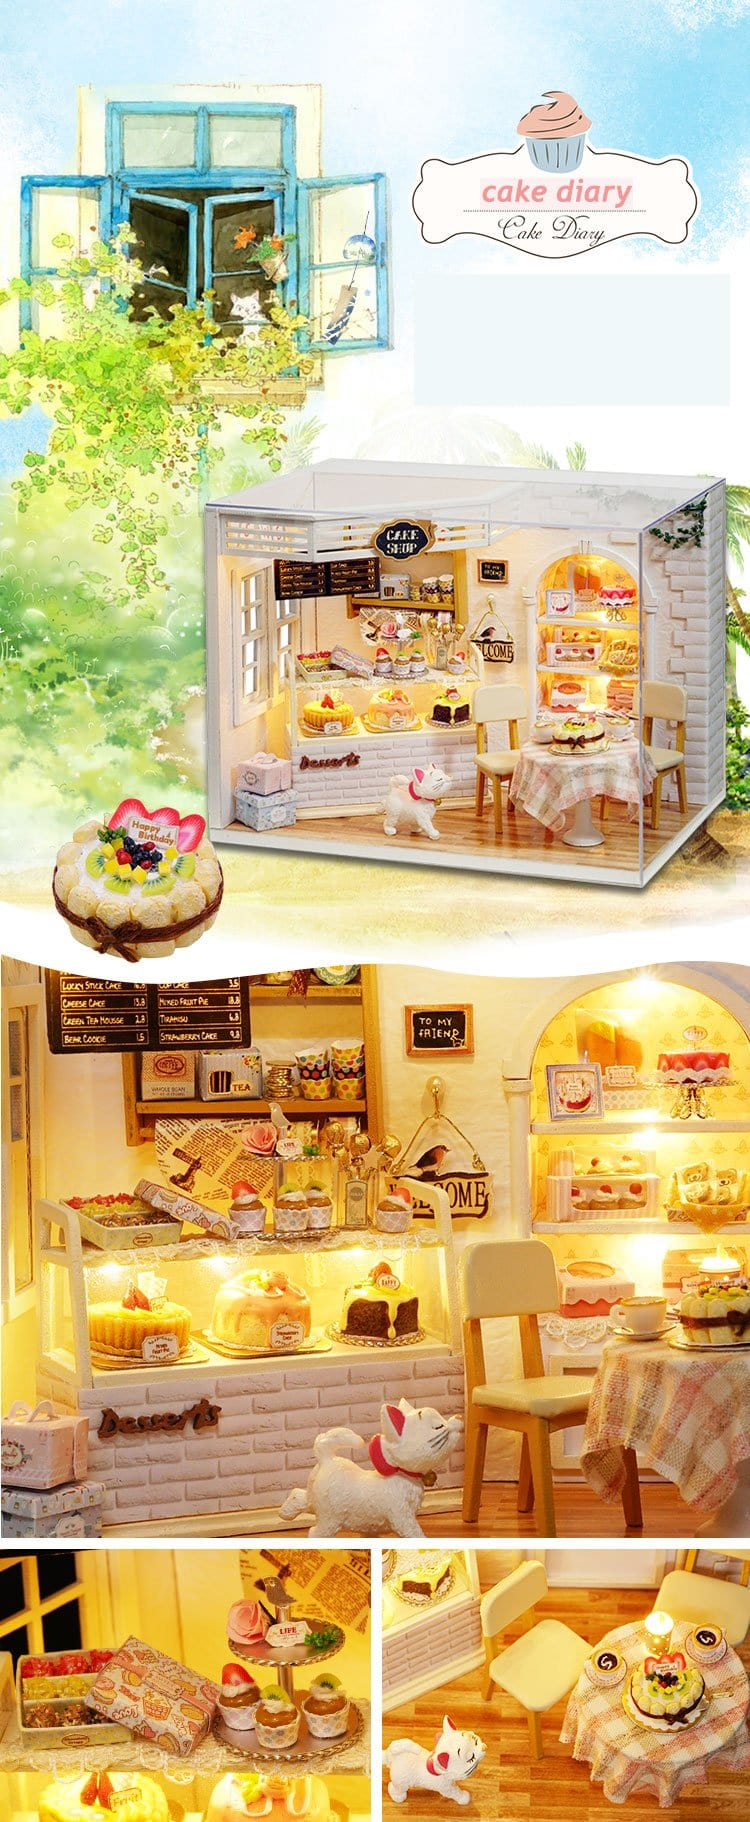 Parisian Cafe Miniature Dollhouse